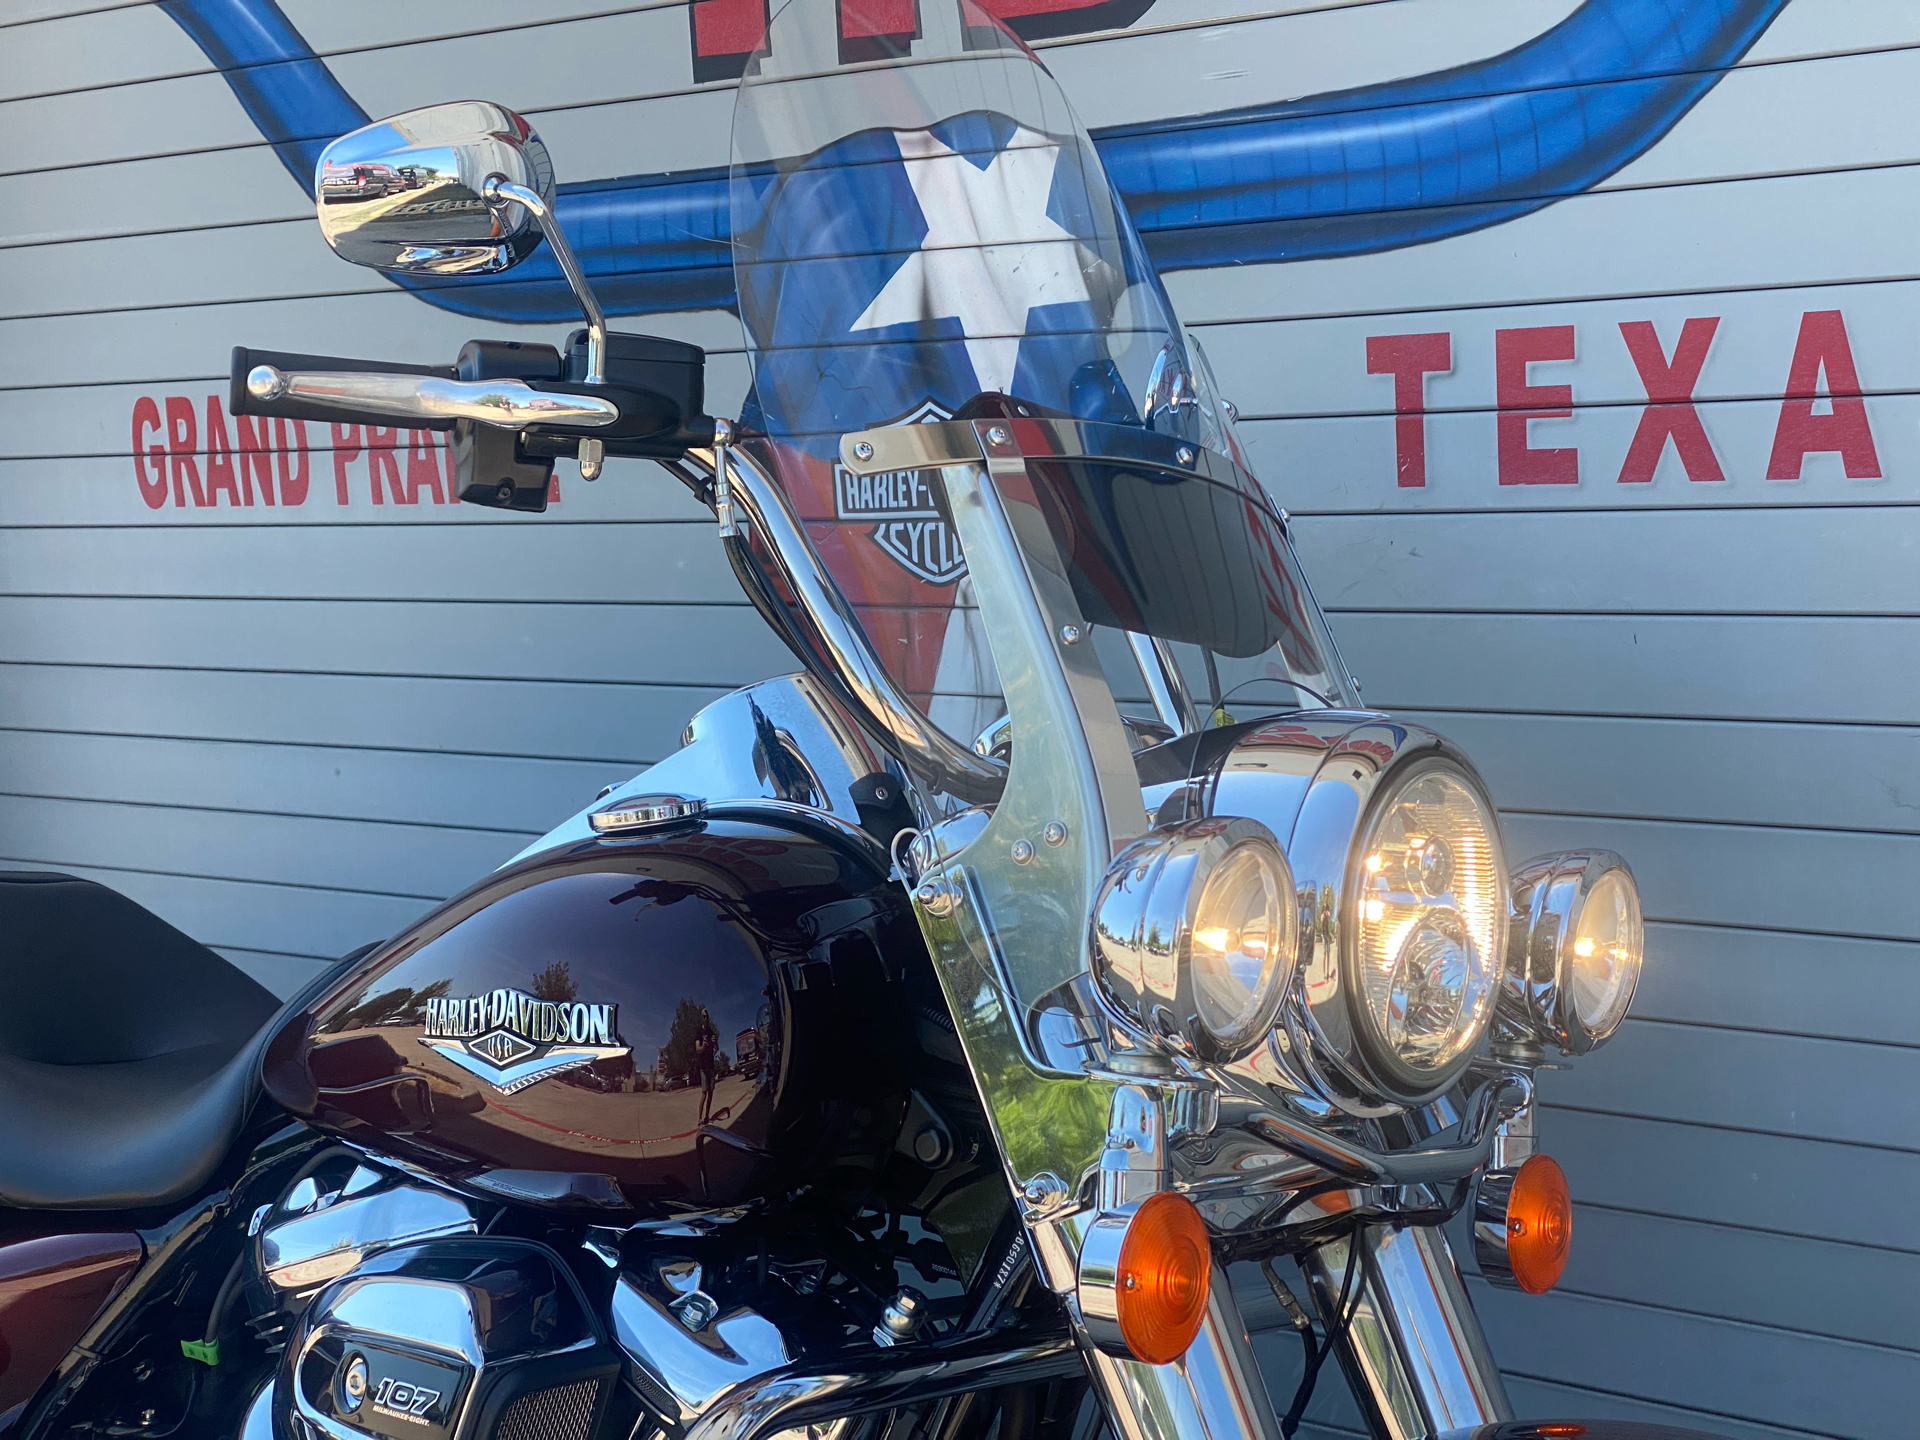 2018 Harley-Davidson Road King® in Grand Prairie, Texas - Photo 2